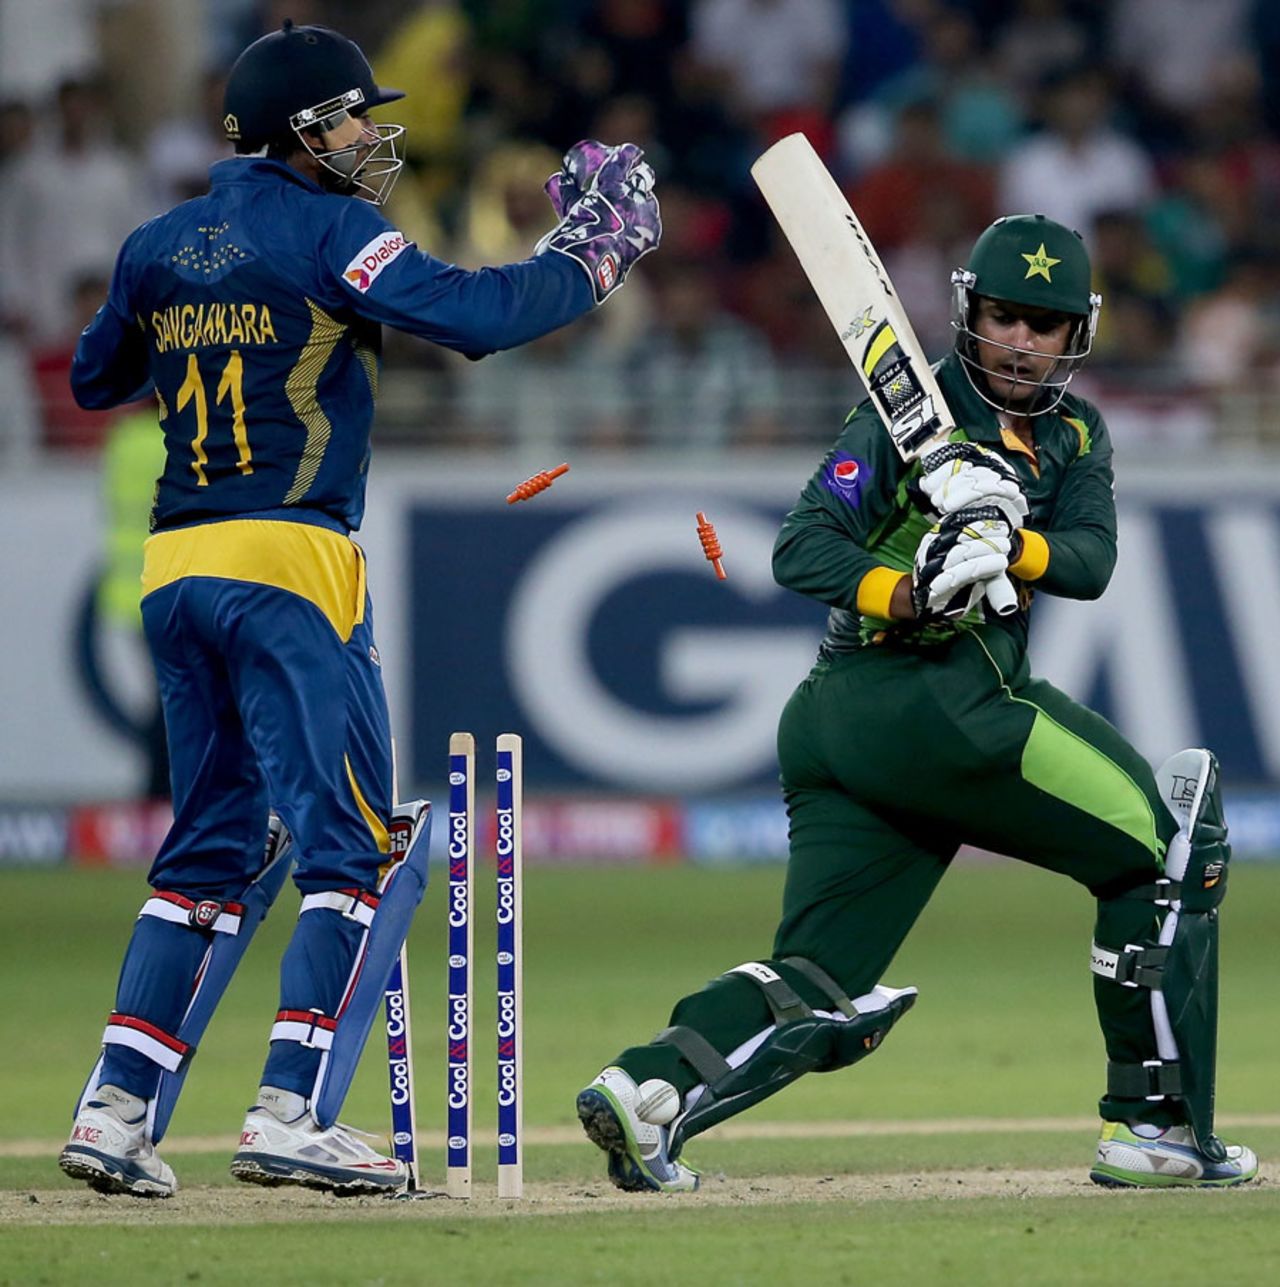 Sharjeel Khan looks behind to find his leg stump knocked back, Pakistan v Sri Lanka, 2nd T20, Dubai, December 13, 2013